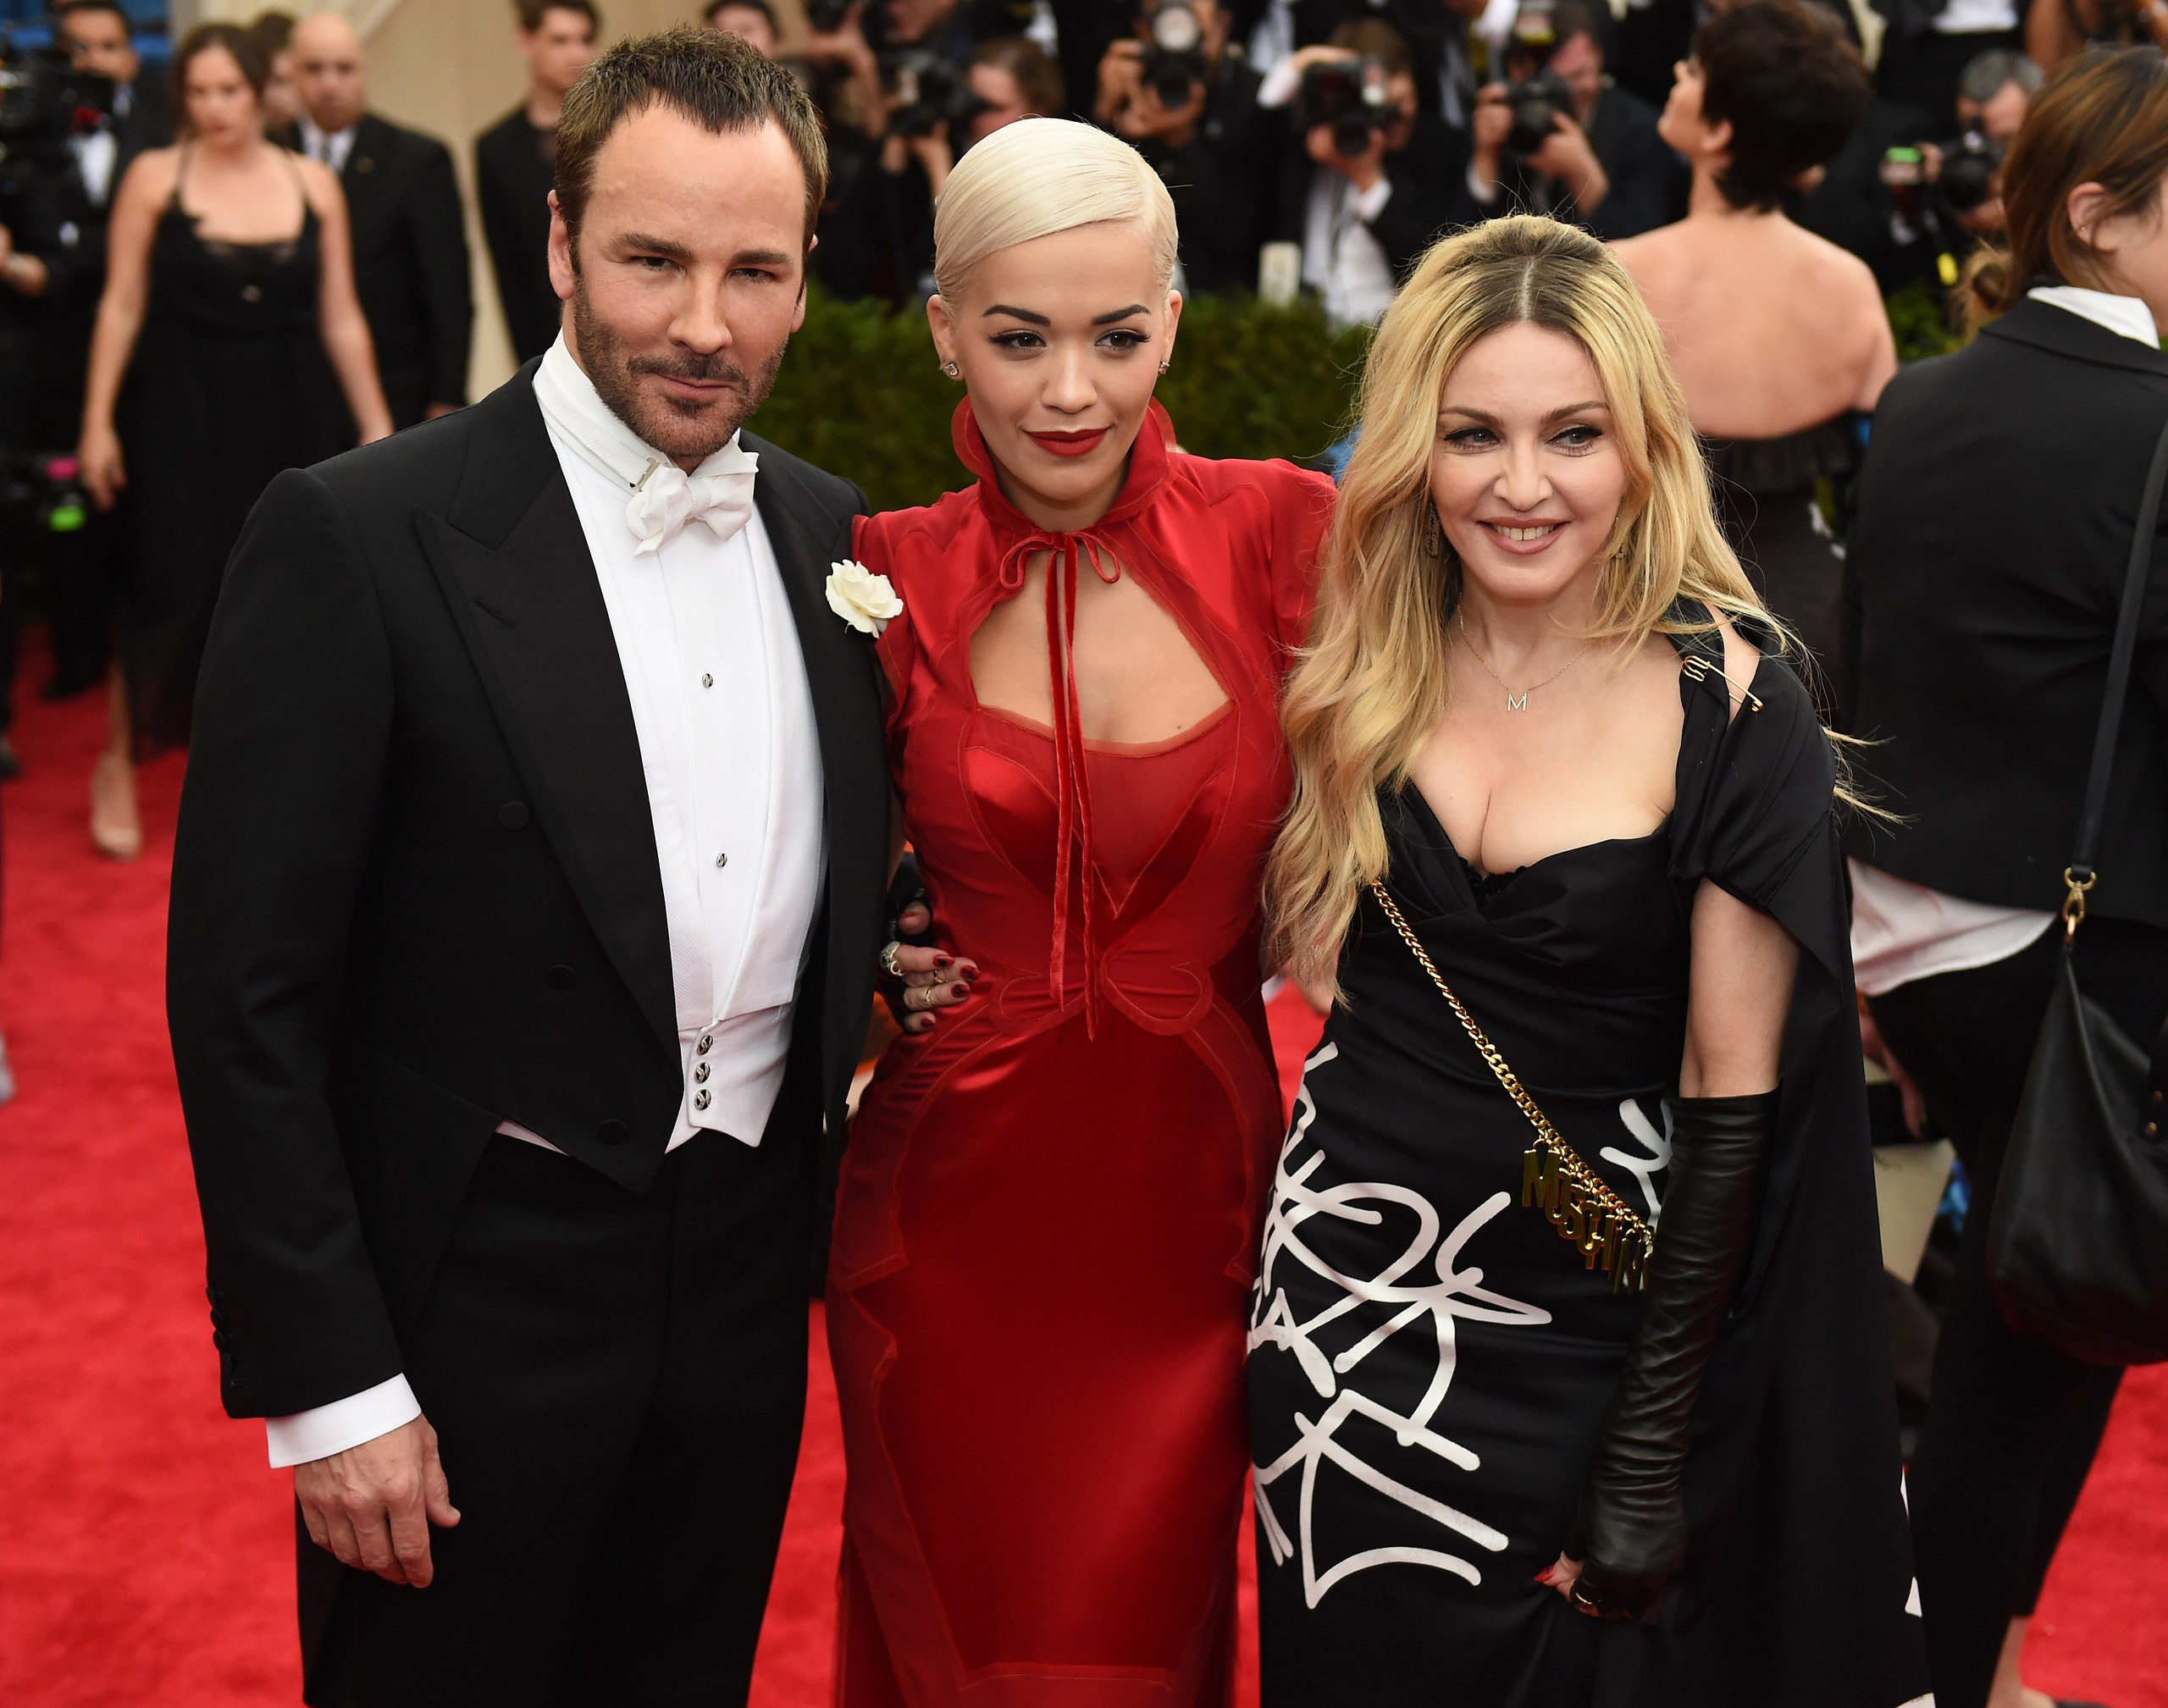 Tom Ford, Rita Ora and Madonna at the 2015 Met Gala